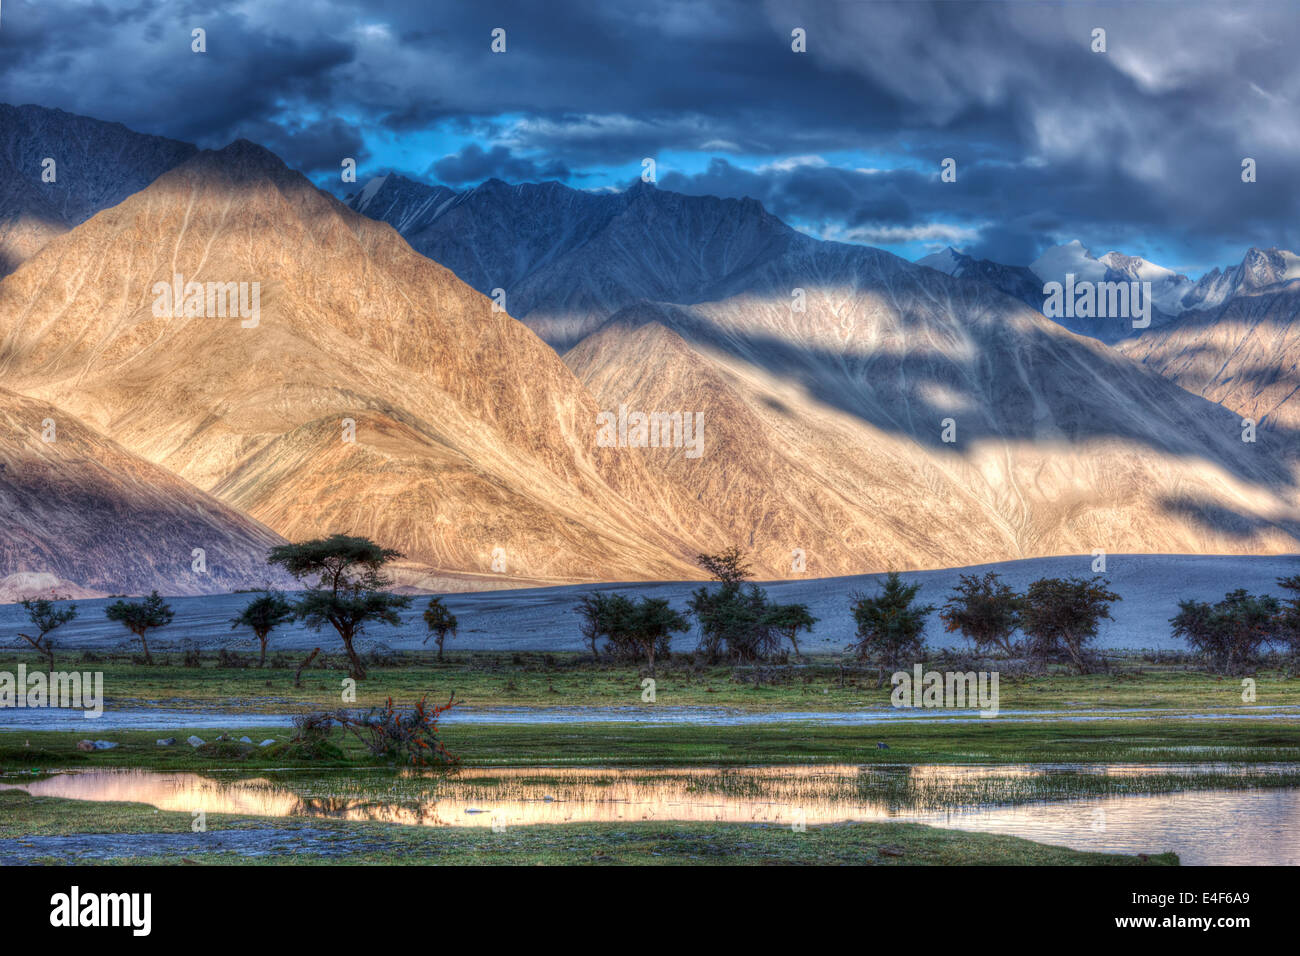 HDR (high dynamic range) image of Nubra river in Nubra valley in Himalayas, Hunder, Ladakh, India Stock Photo